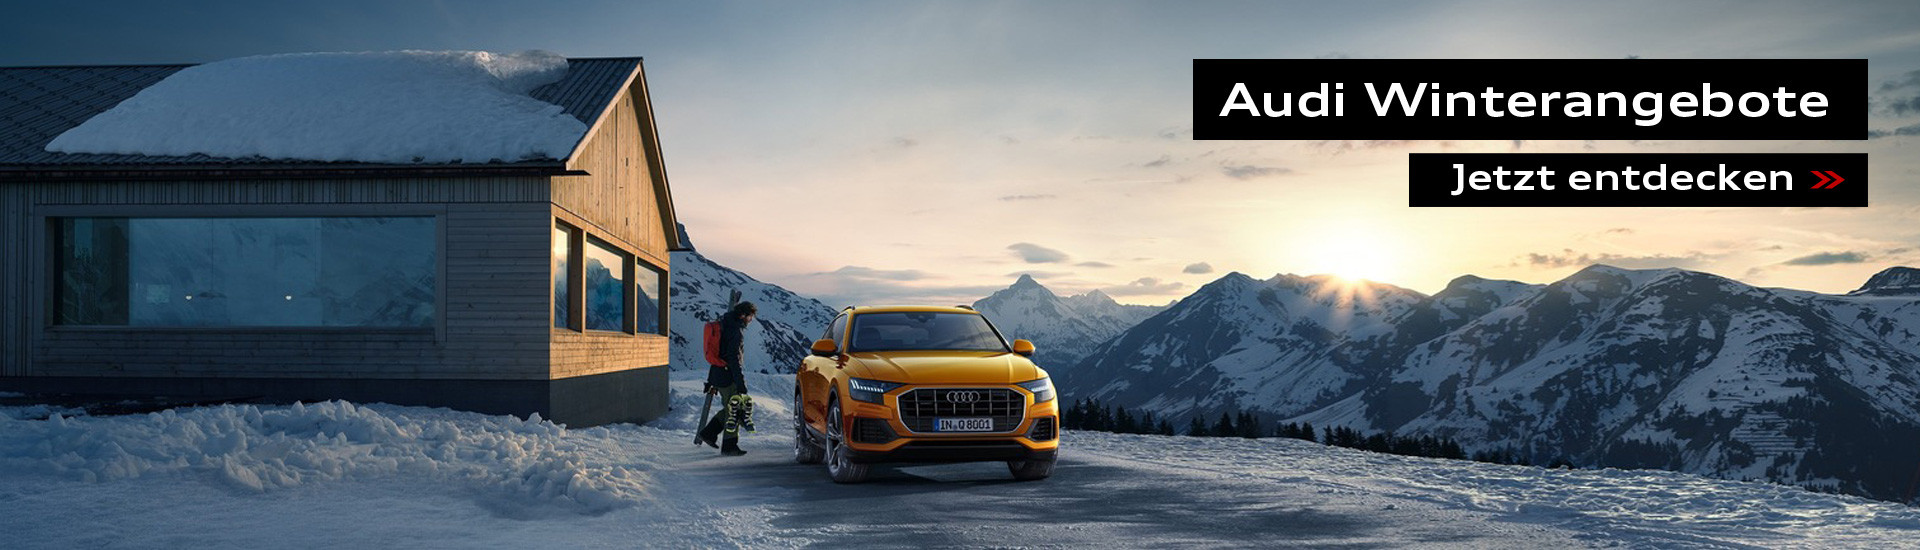 Slider-Audi-Winterangebote.jpg